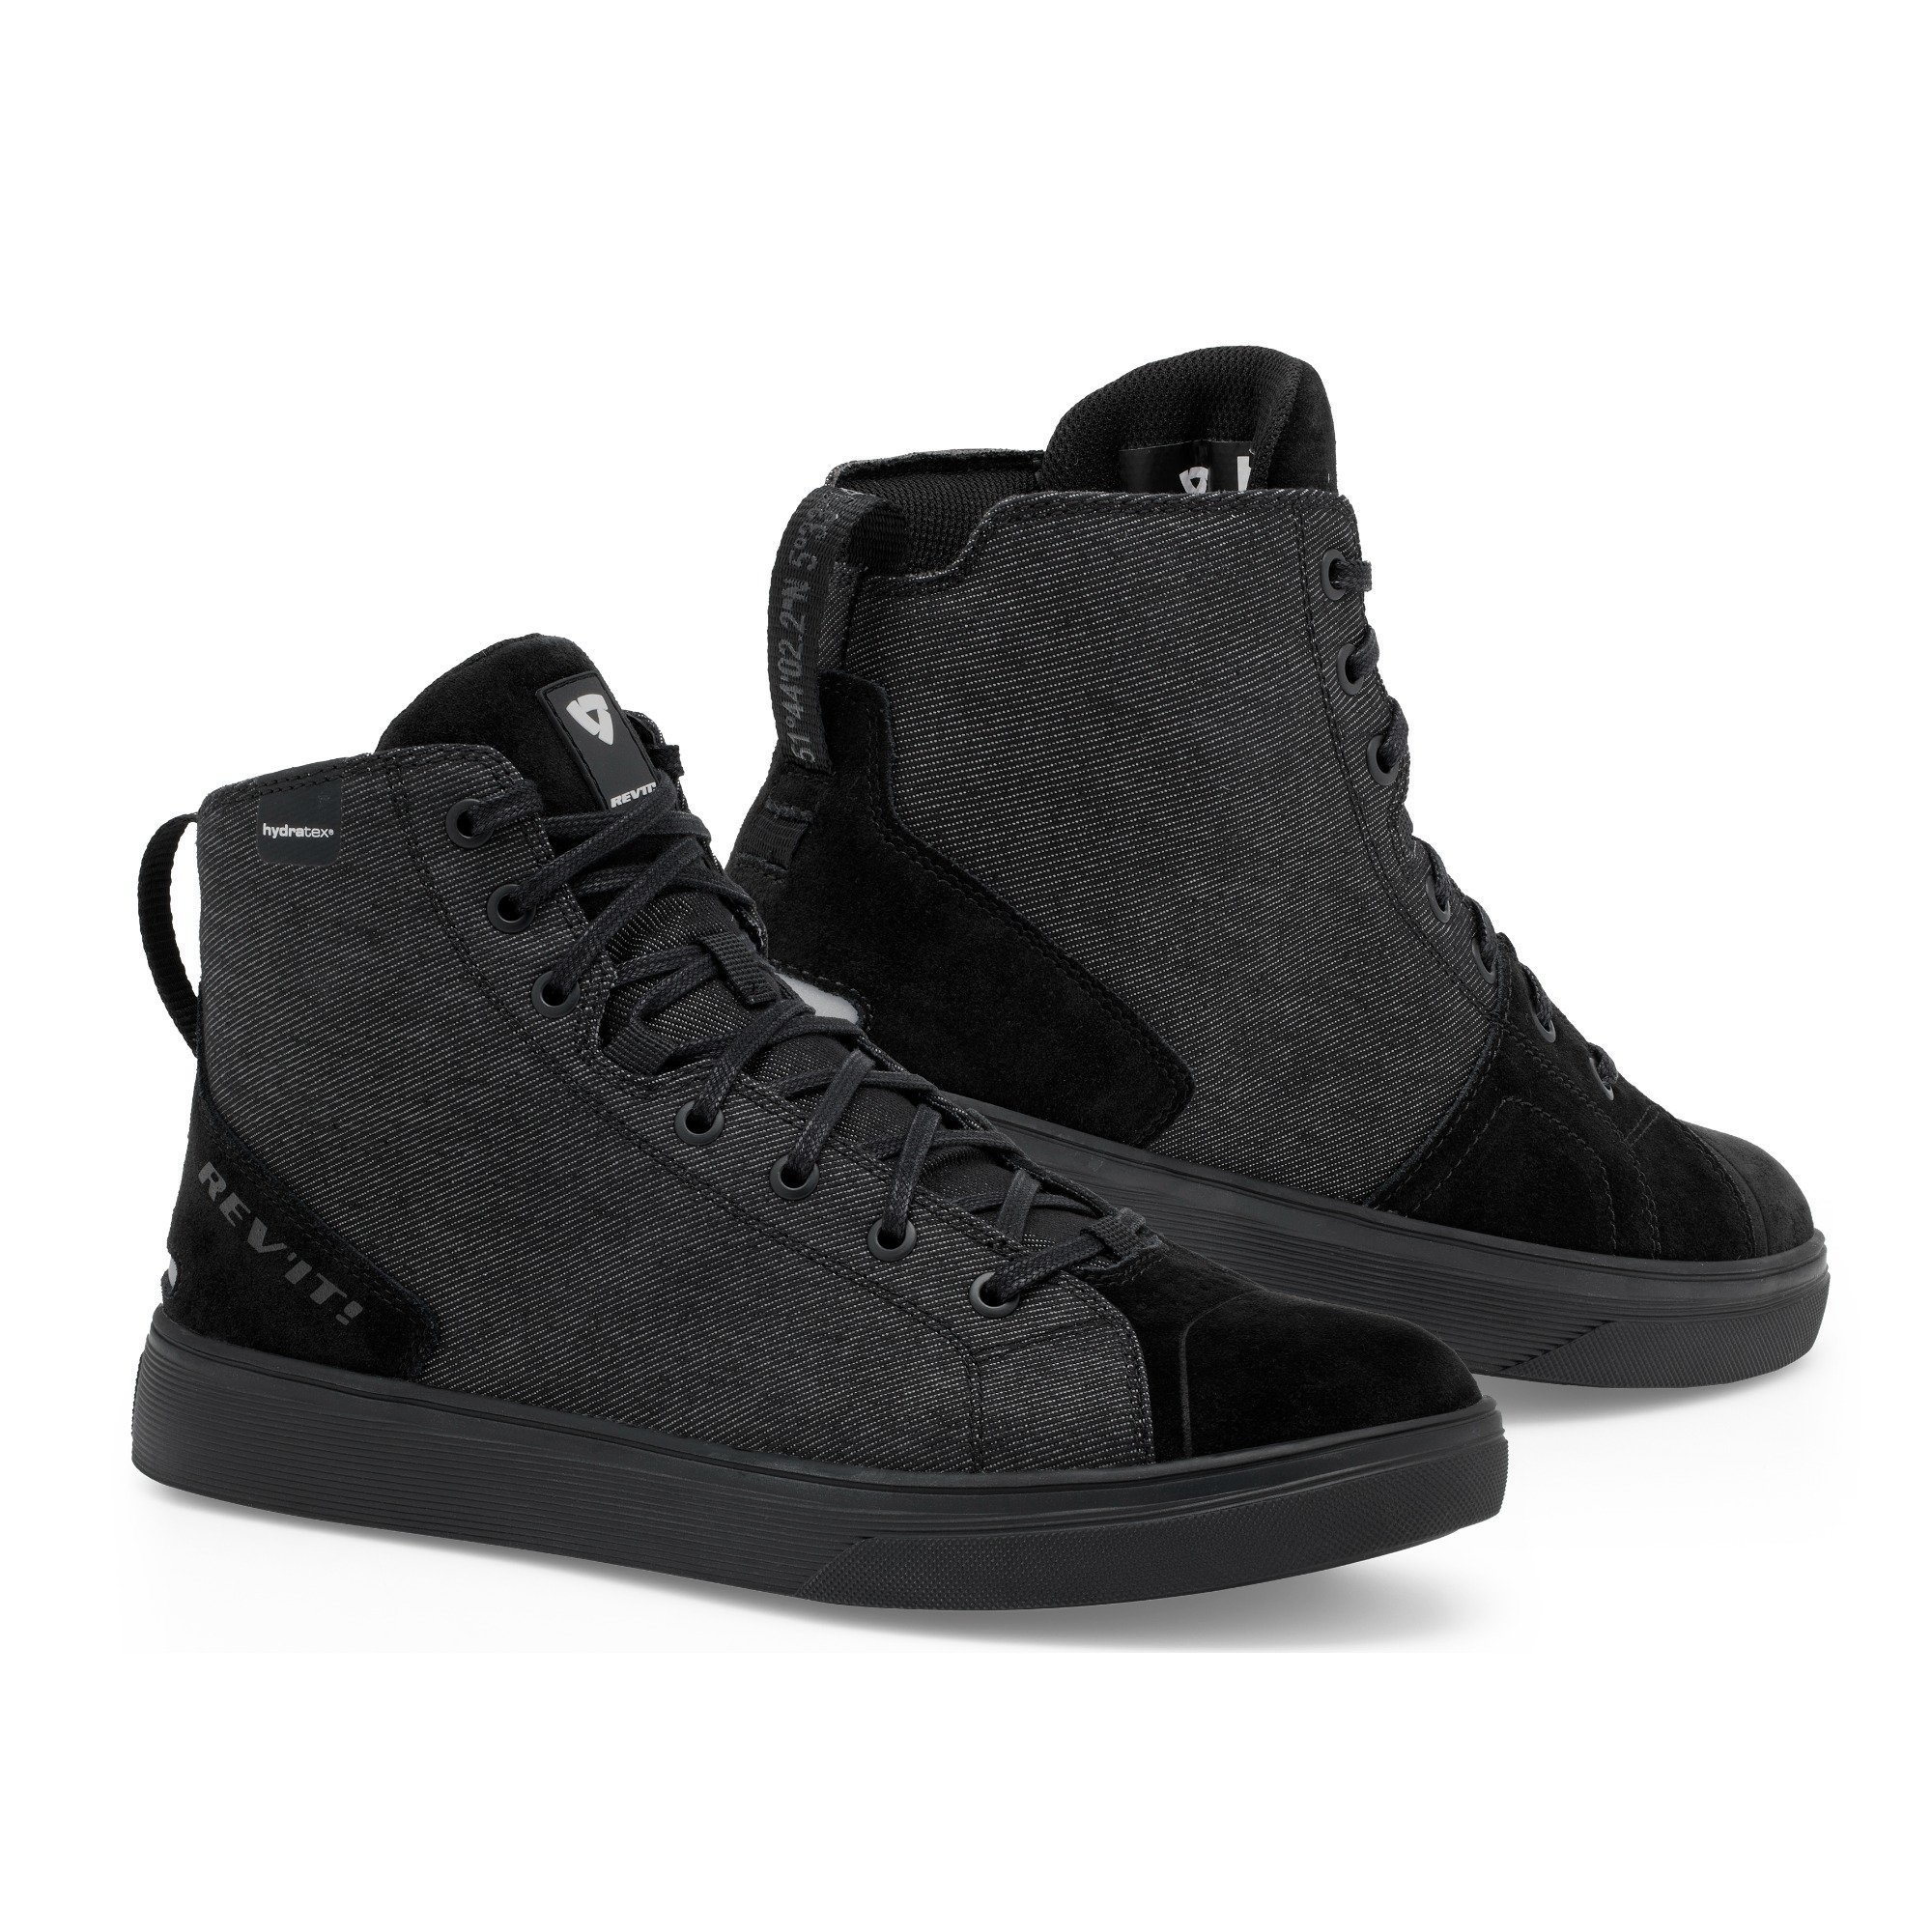 Image of REV'IT! Delta H2O Shoes Black Size 44 EN